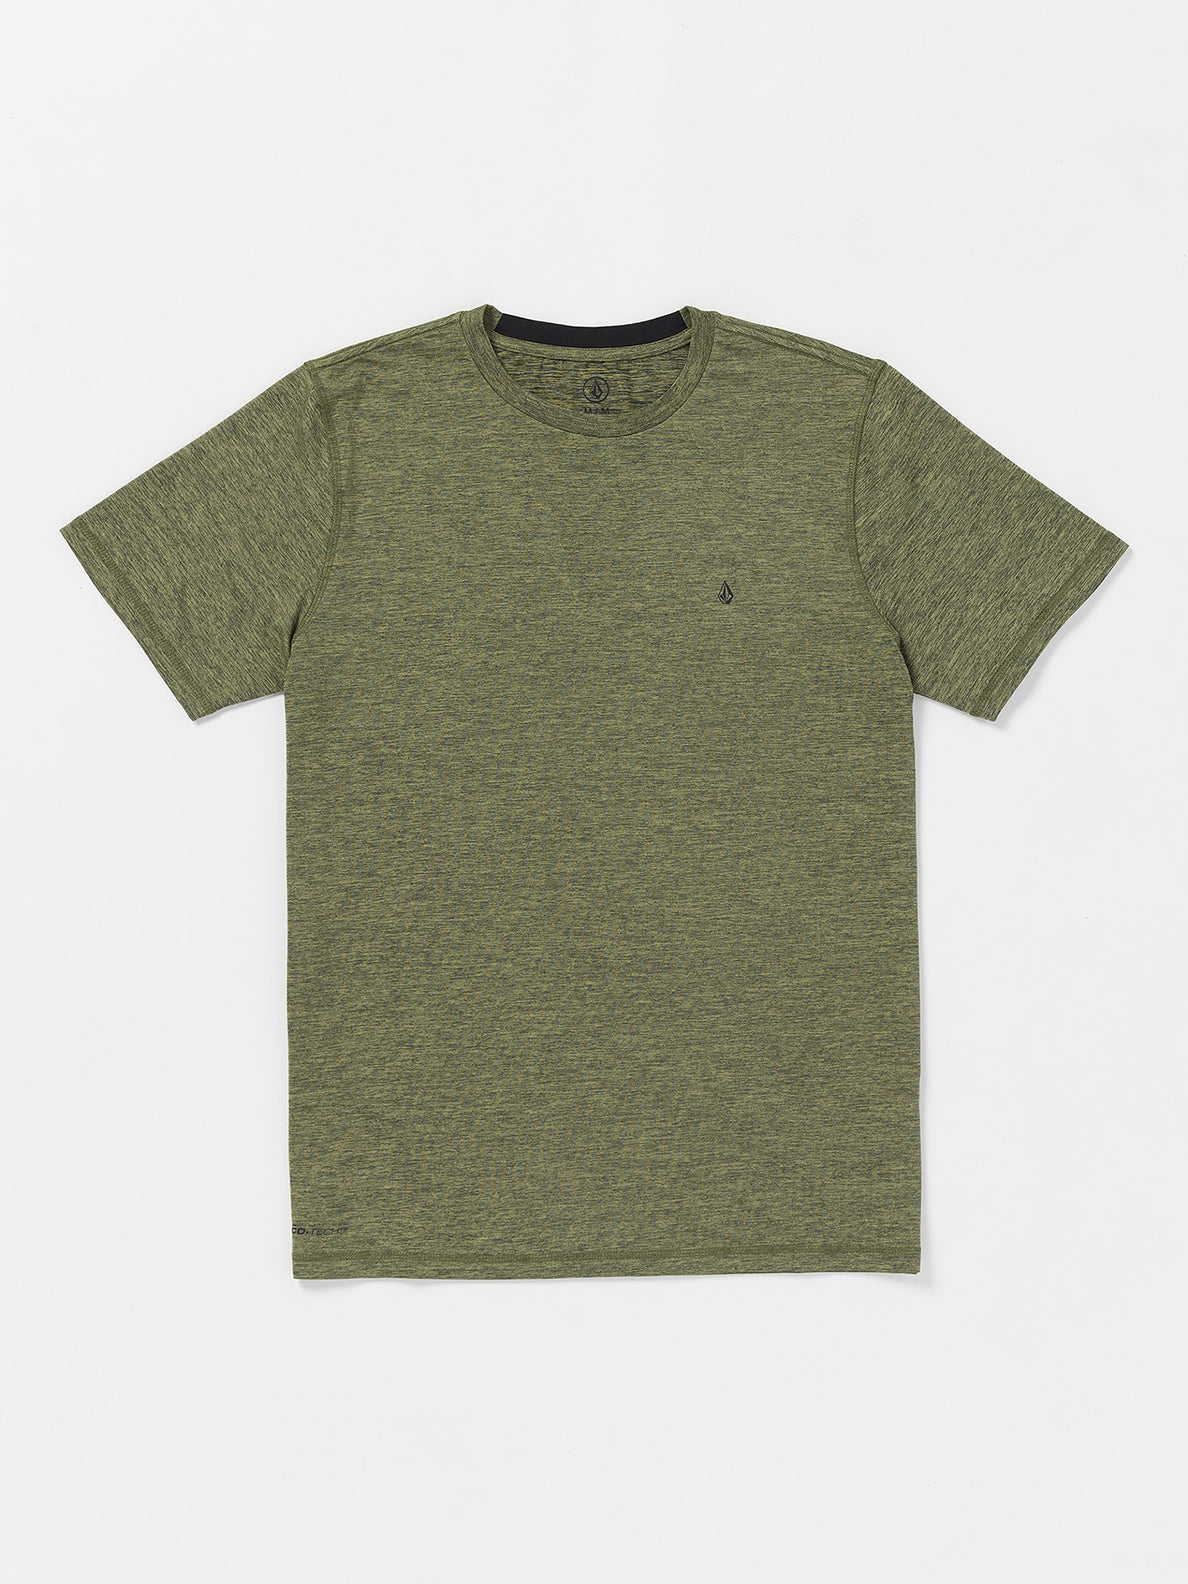 Stoneverse Crew Short Sleeve Shirt - Vintage Green